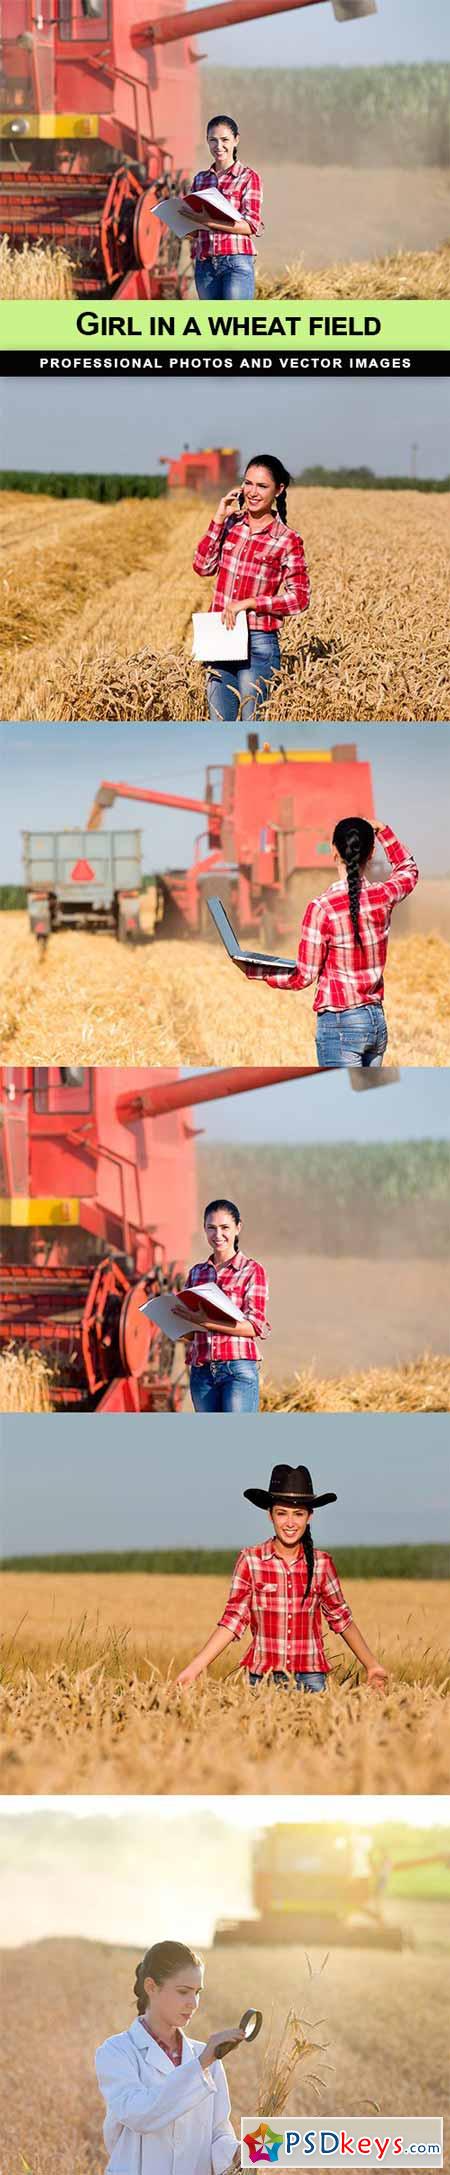 Girl in a wheat field - 5 UHQ JPEG